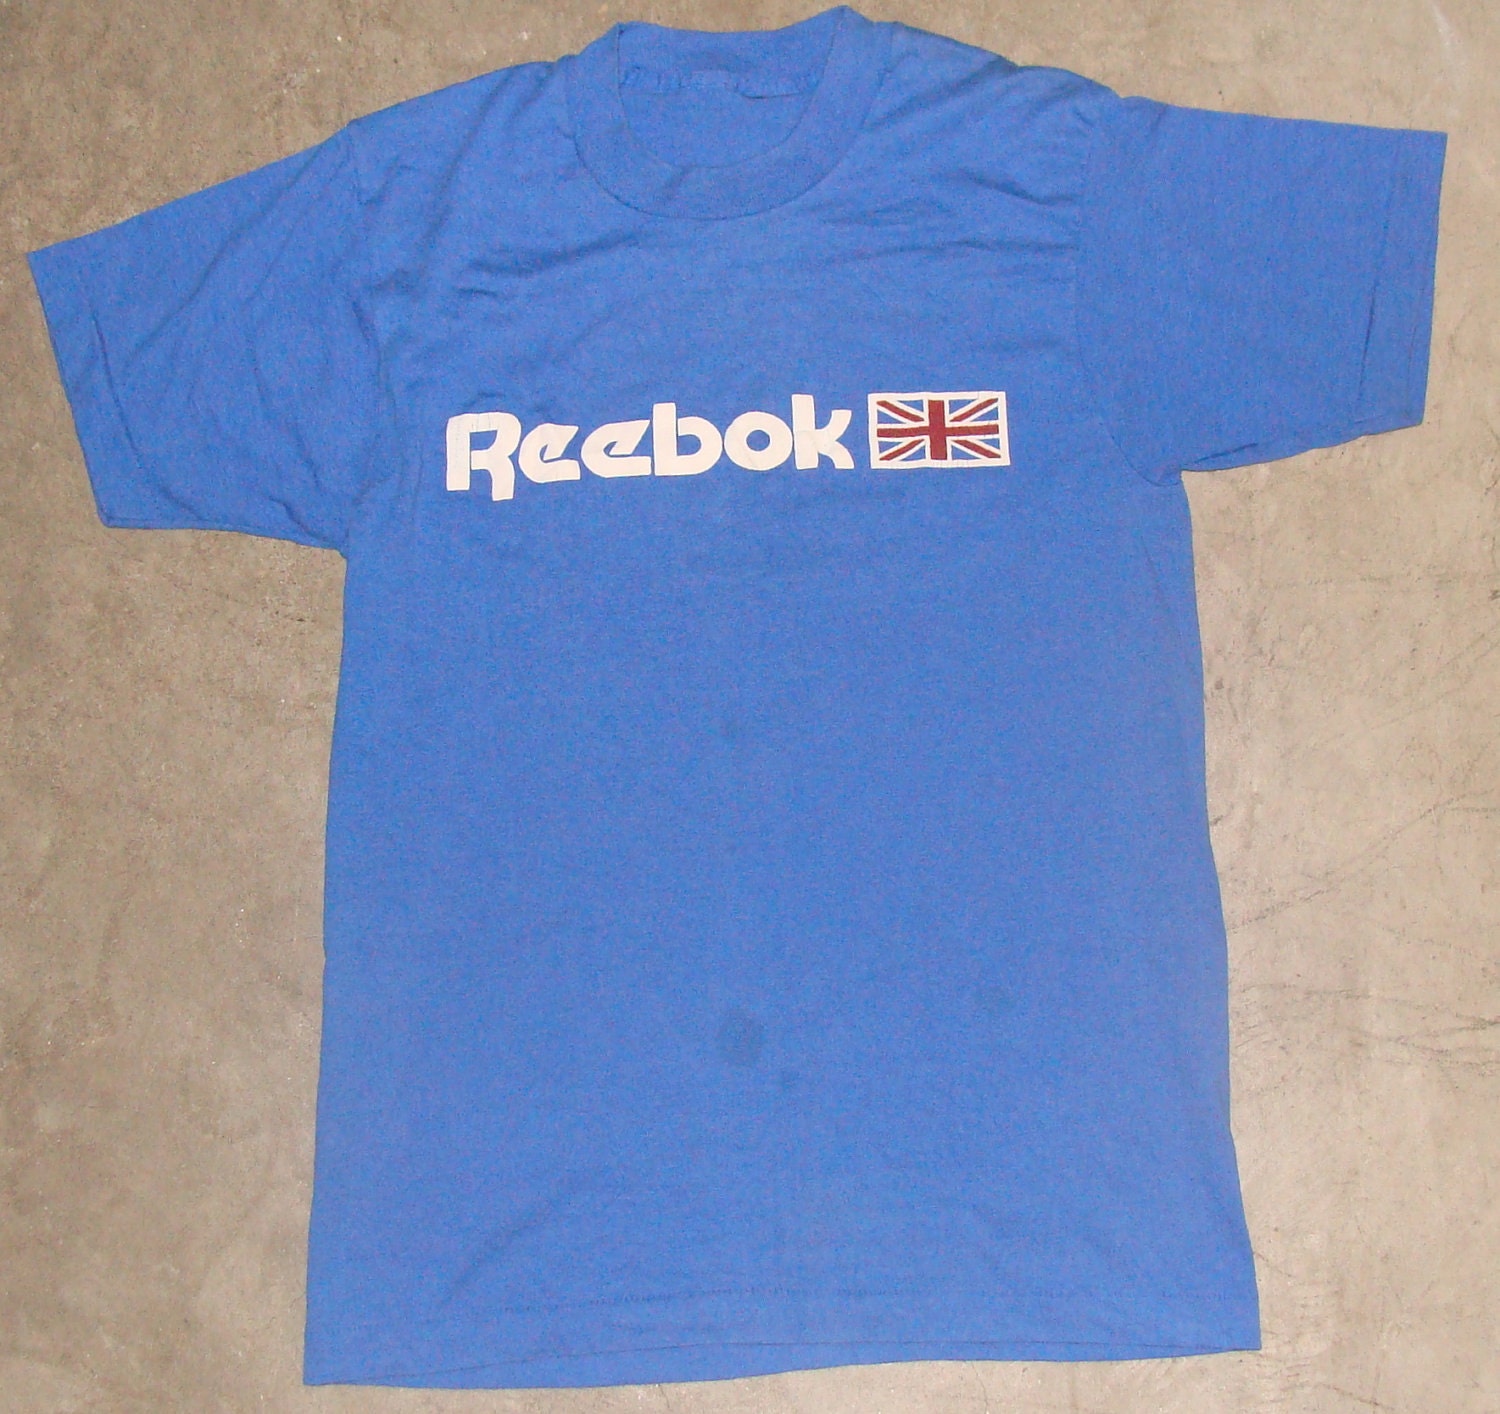 Vintage 80s Reebok Union Jack Blue T-shirt Etsy